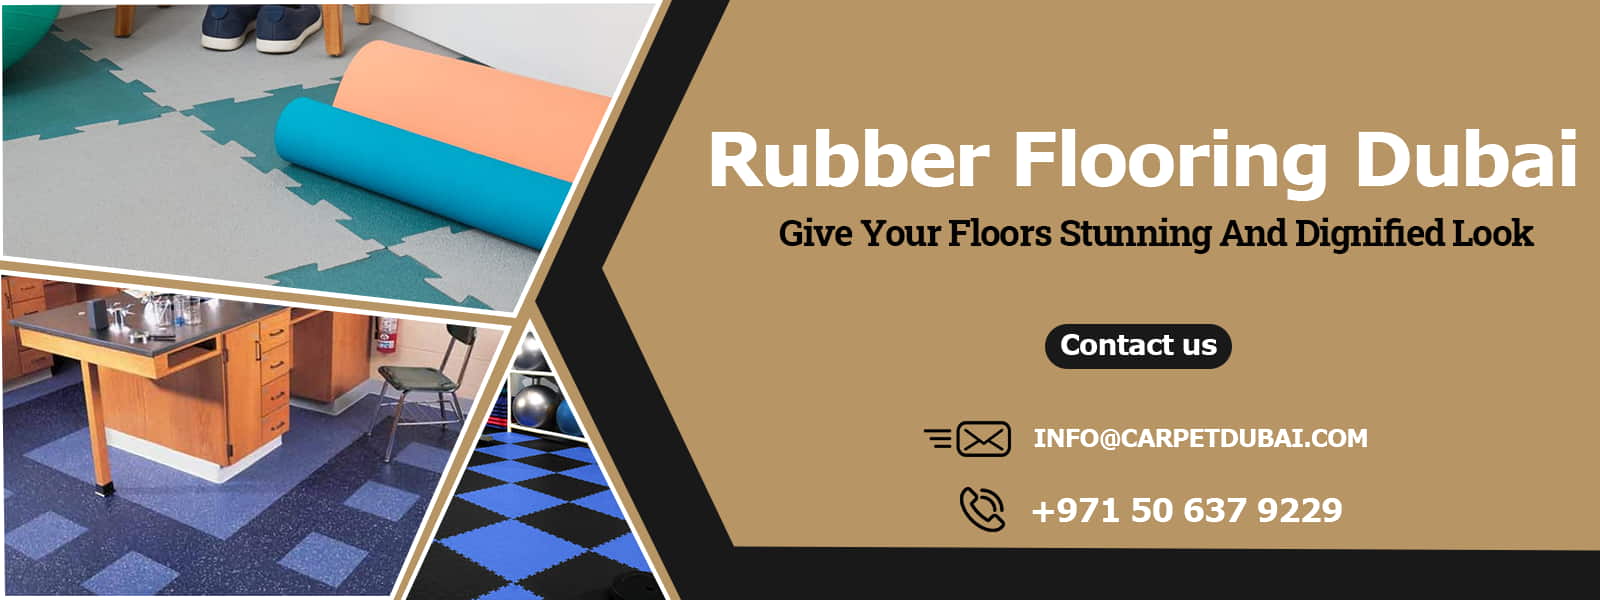 Rubber-Flooring-Dubai banner